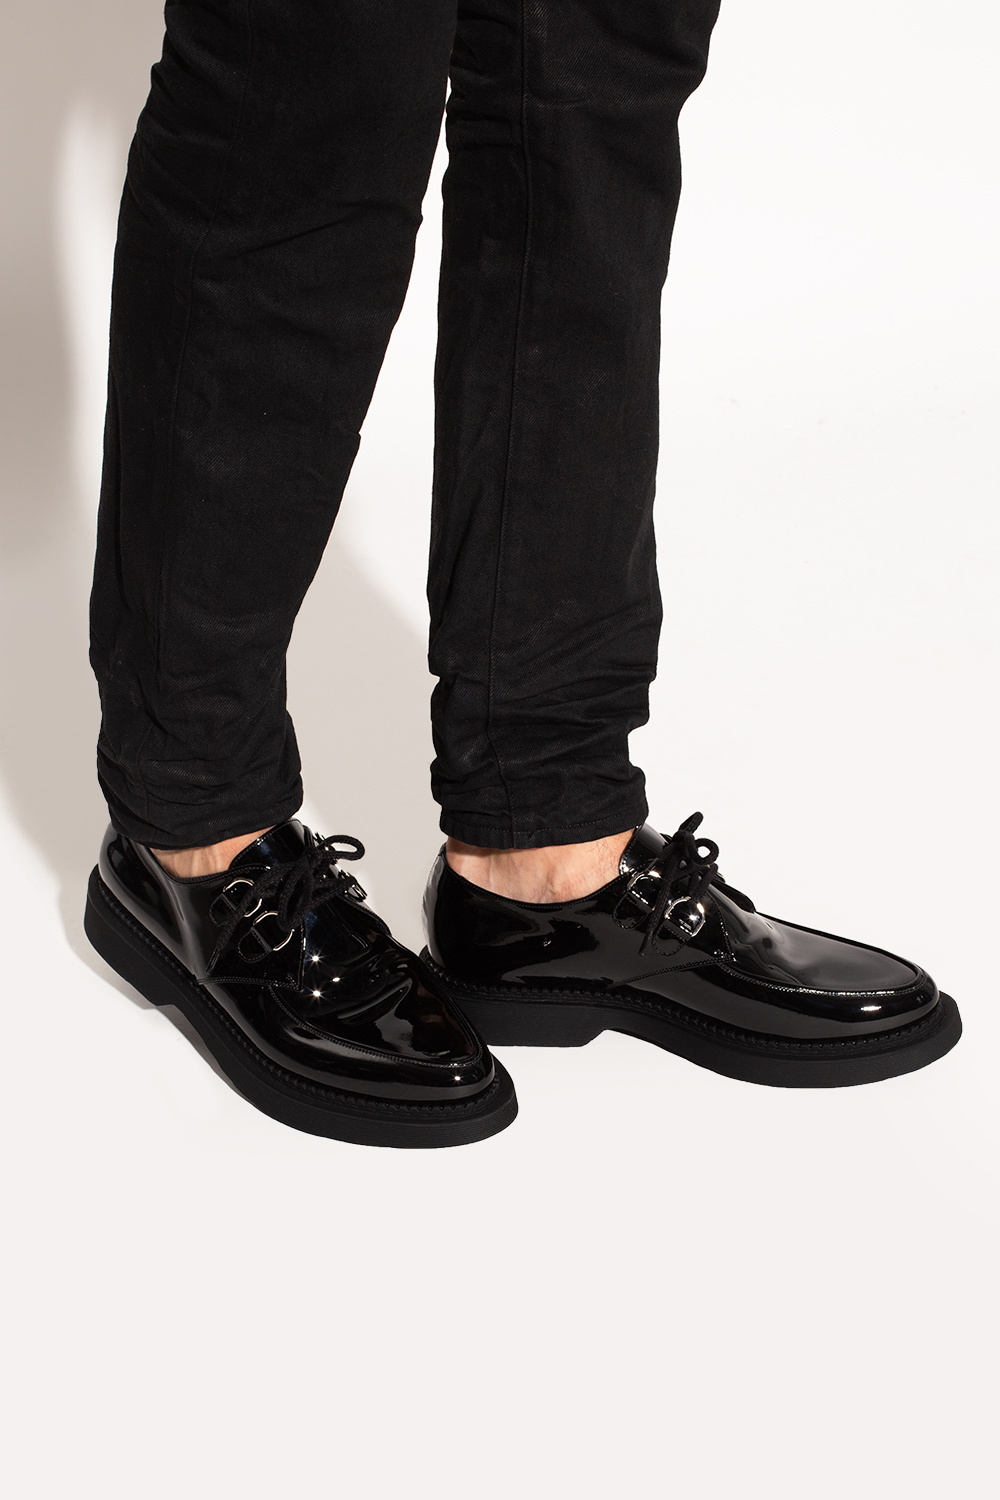 Giày Nam Yves Saint Laurent, Mã kiểu: 663414-1yl00-1000